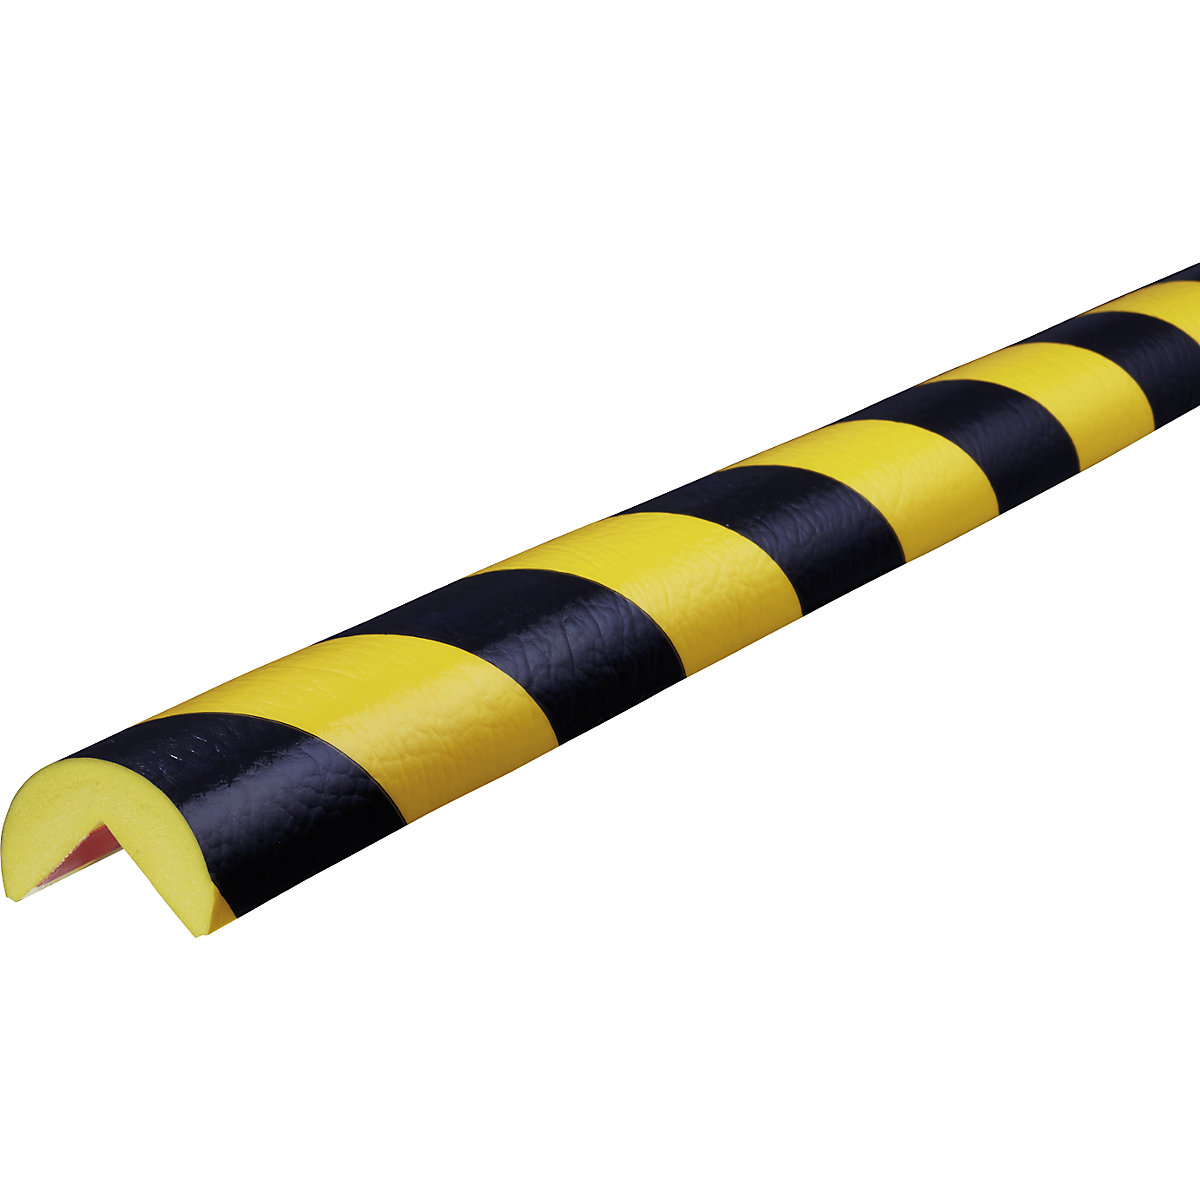 Knuffi® corner protection – SHG, type A, reusable, 1 m piece, black / yellow-2